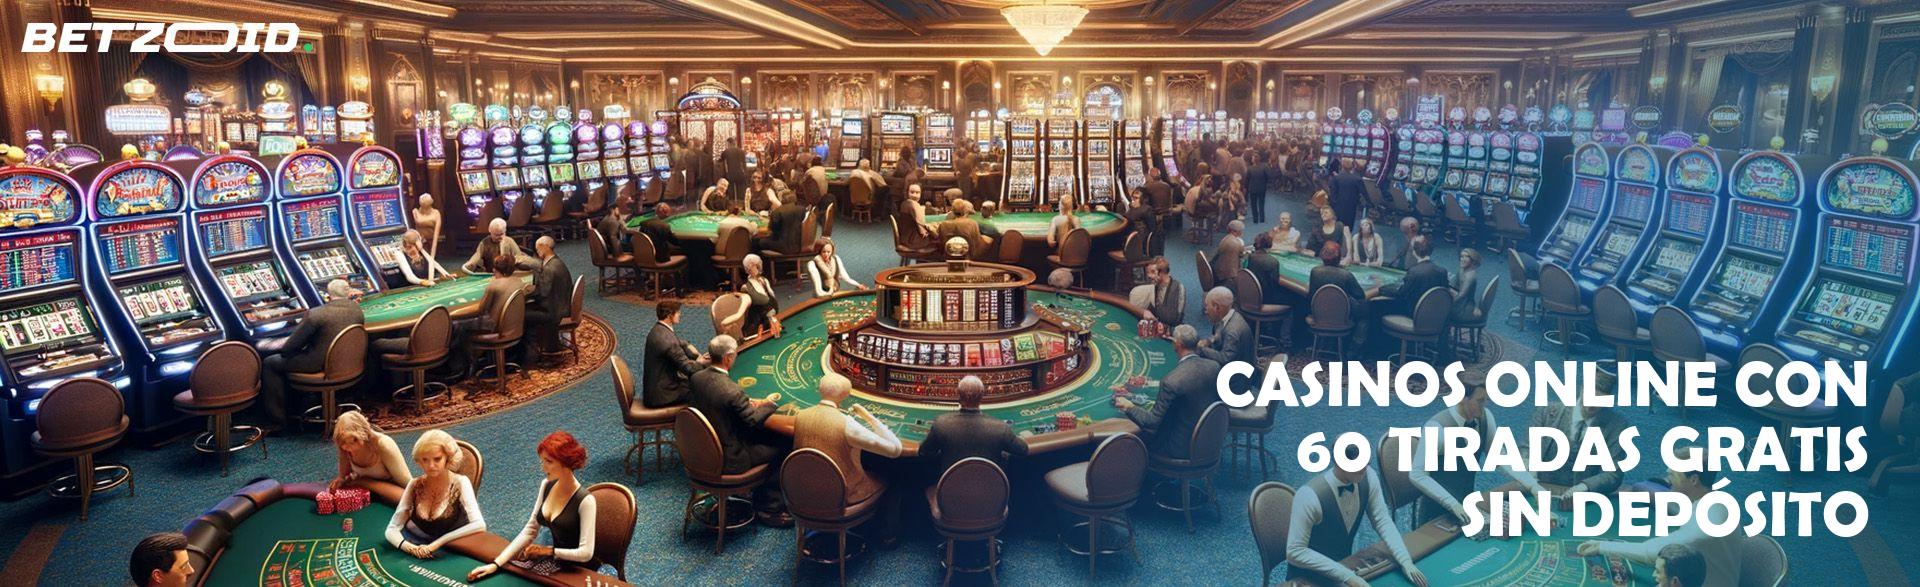 Casino Juegos Tiradas Gratis